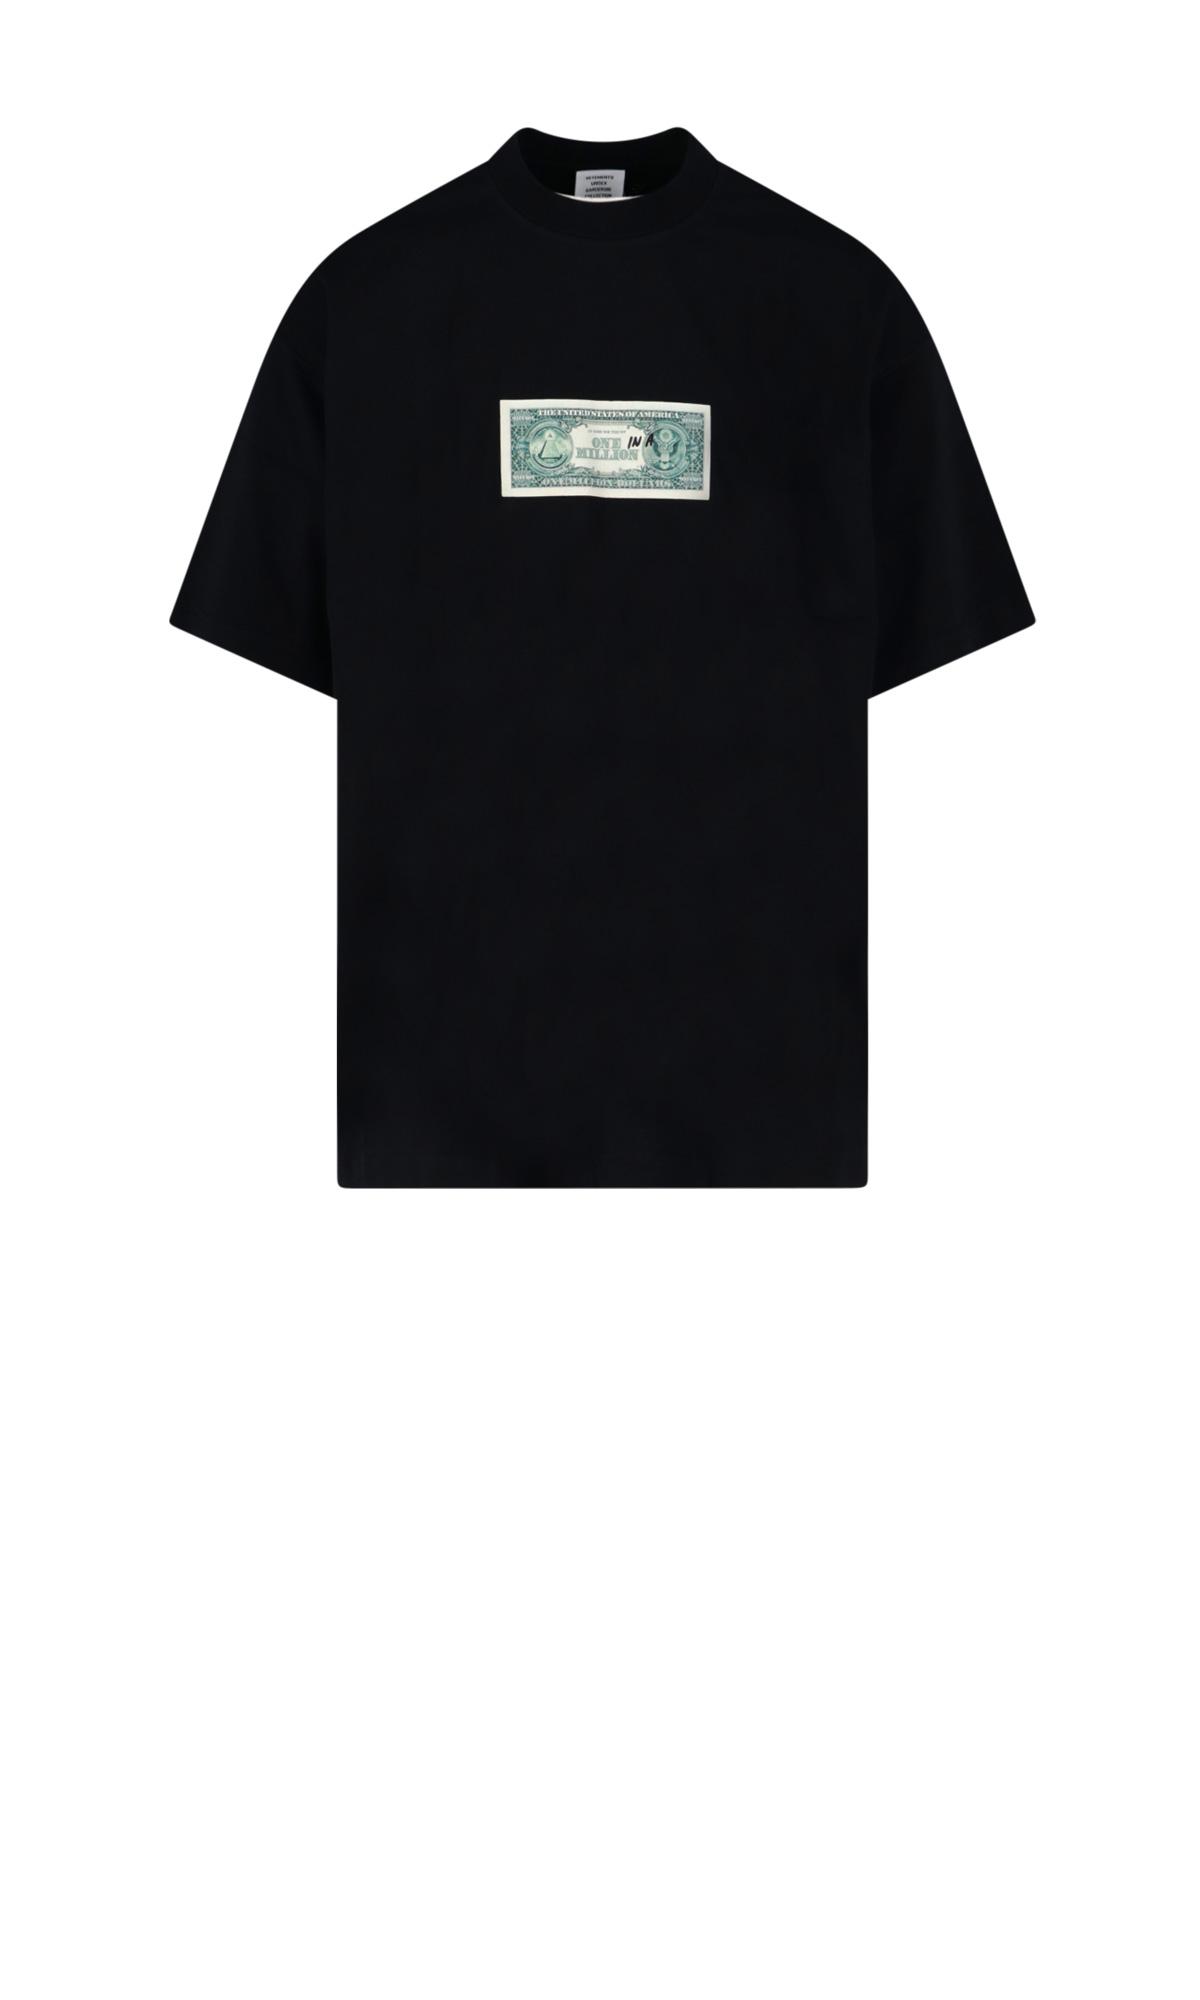 Vetements 'one In A Million' T-shirt in Black | Lyst